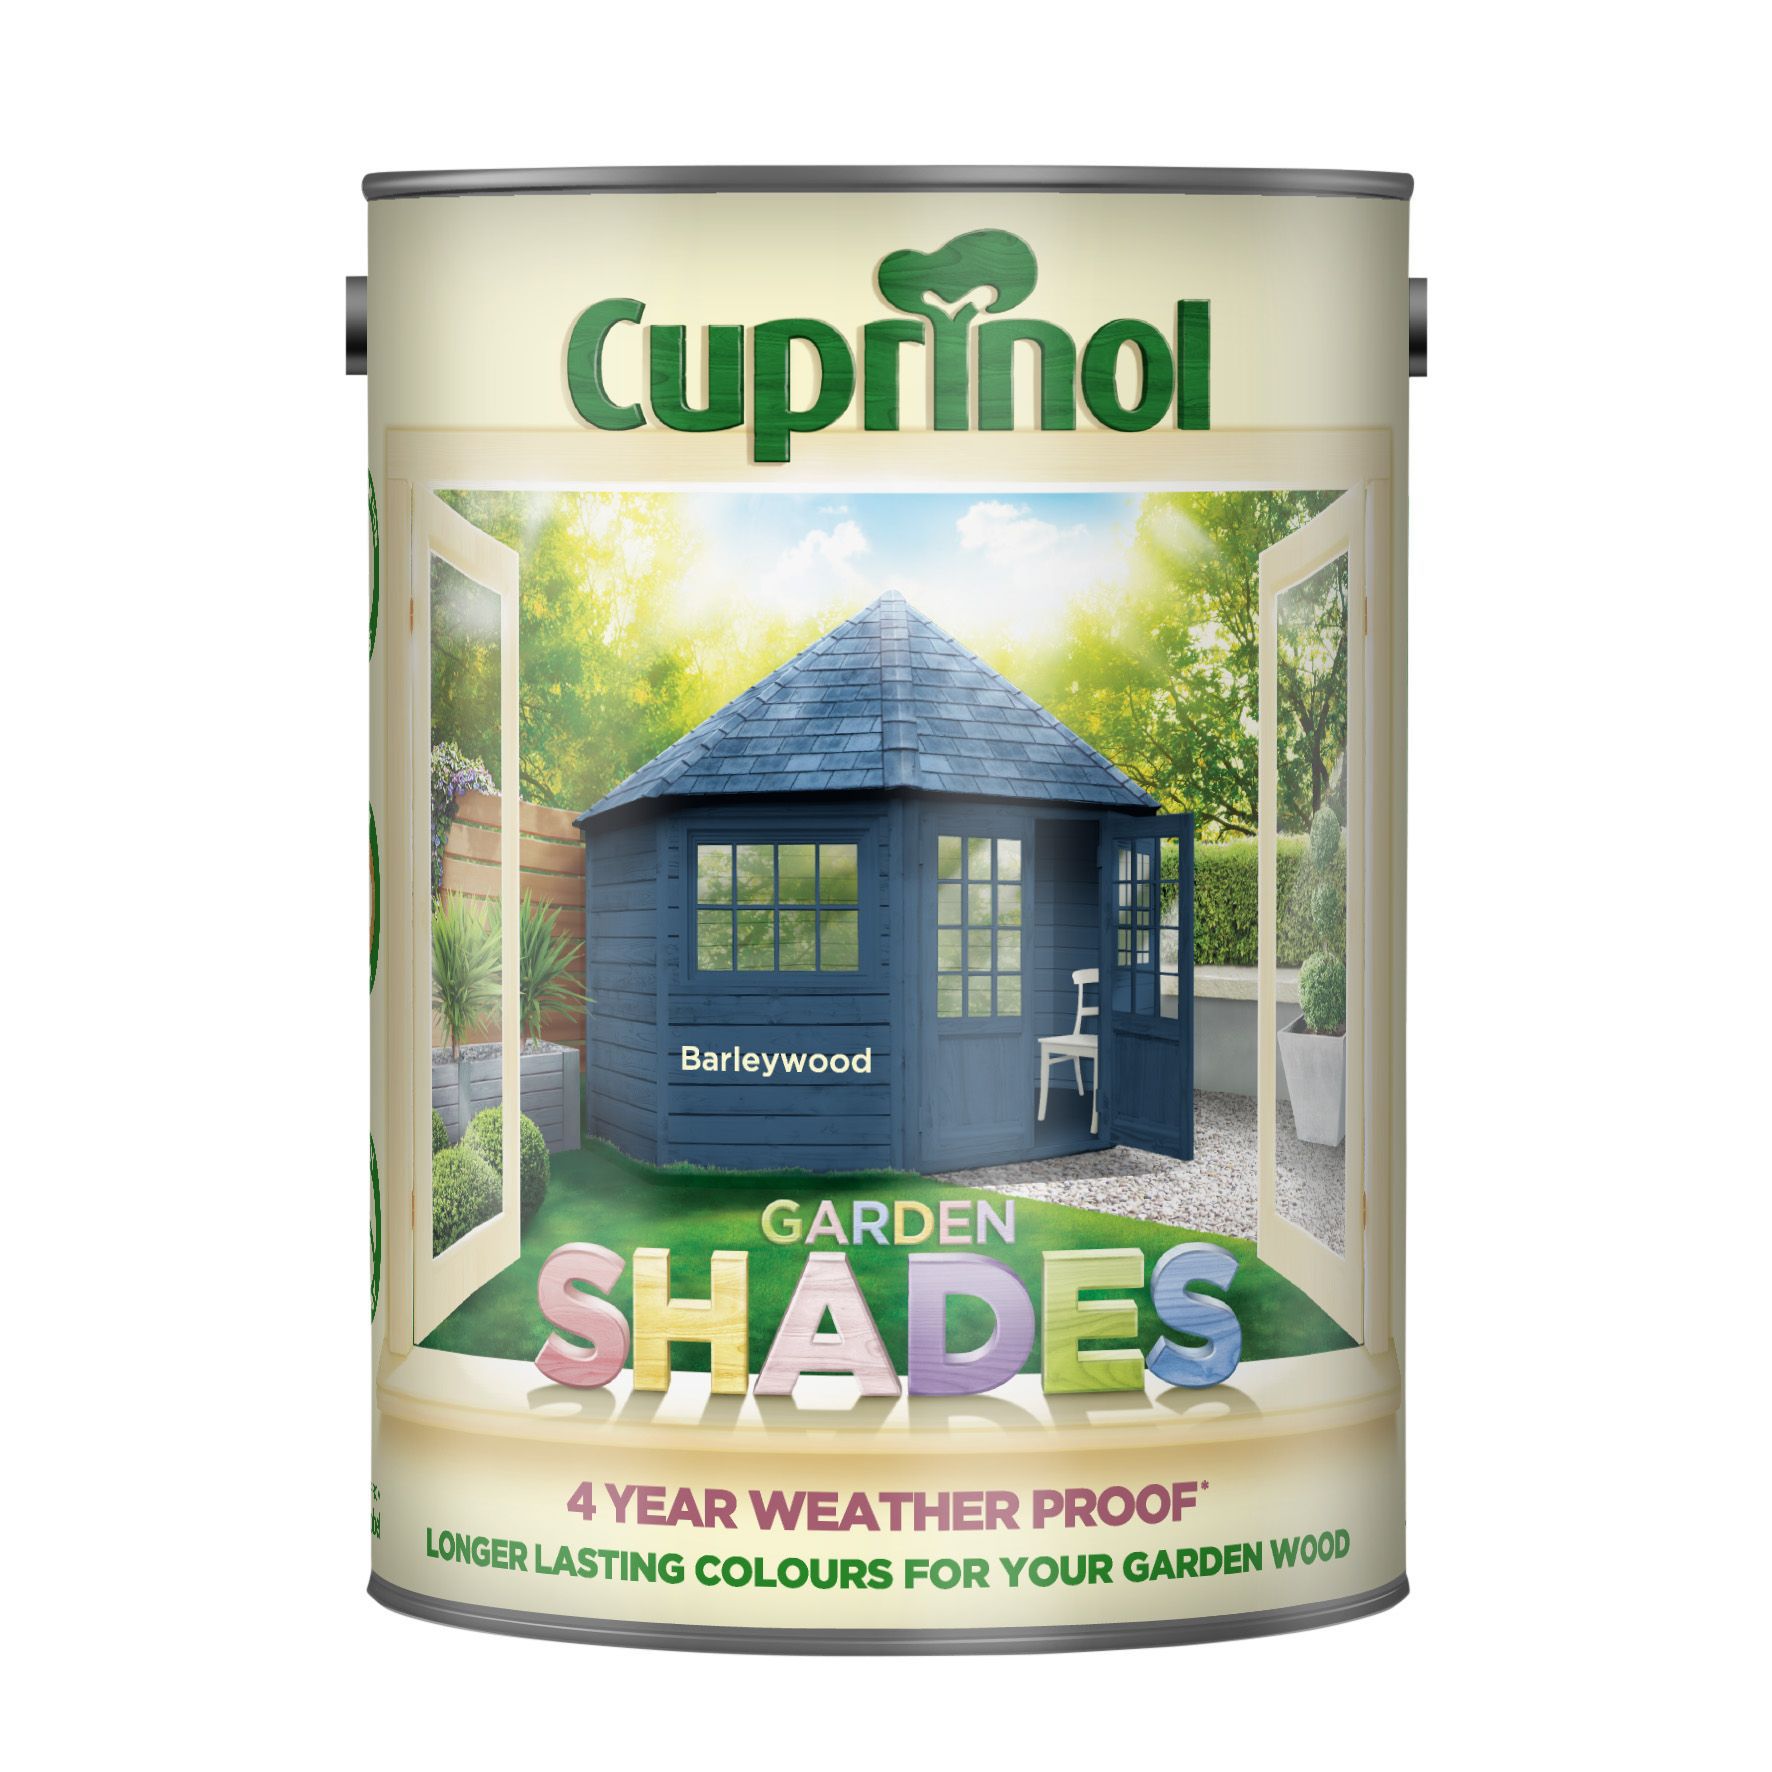 Cuprinol Garden shades Barleywood Matt Multi-surface Exterior Wood paint, 5L Tin